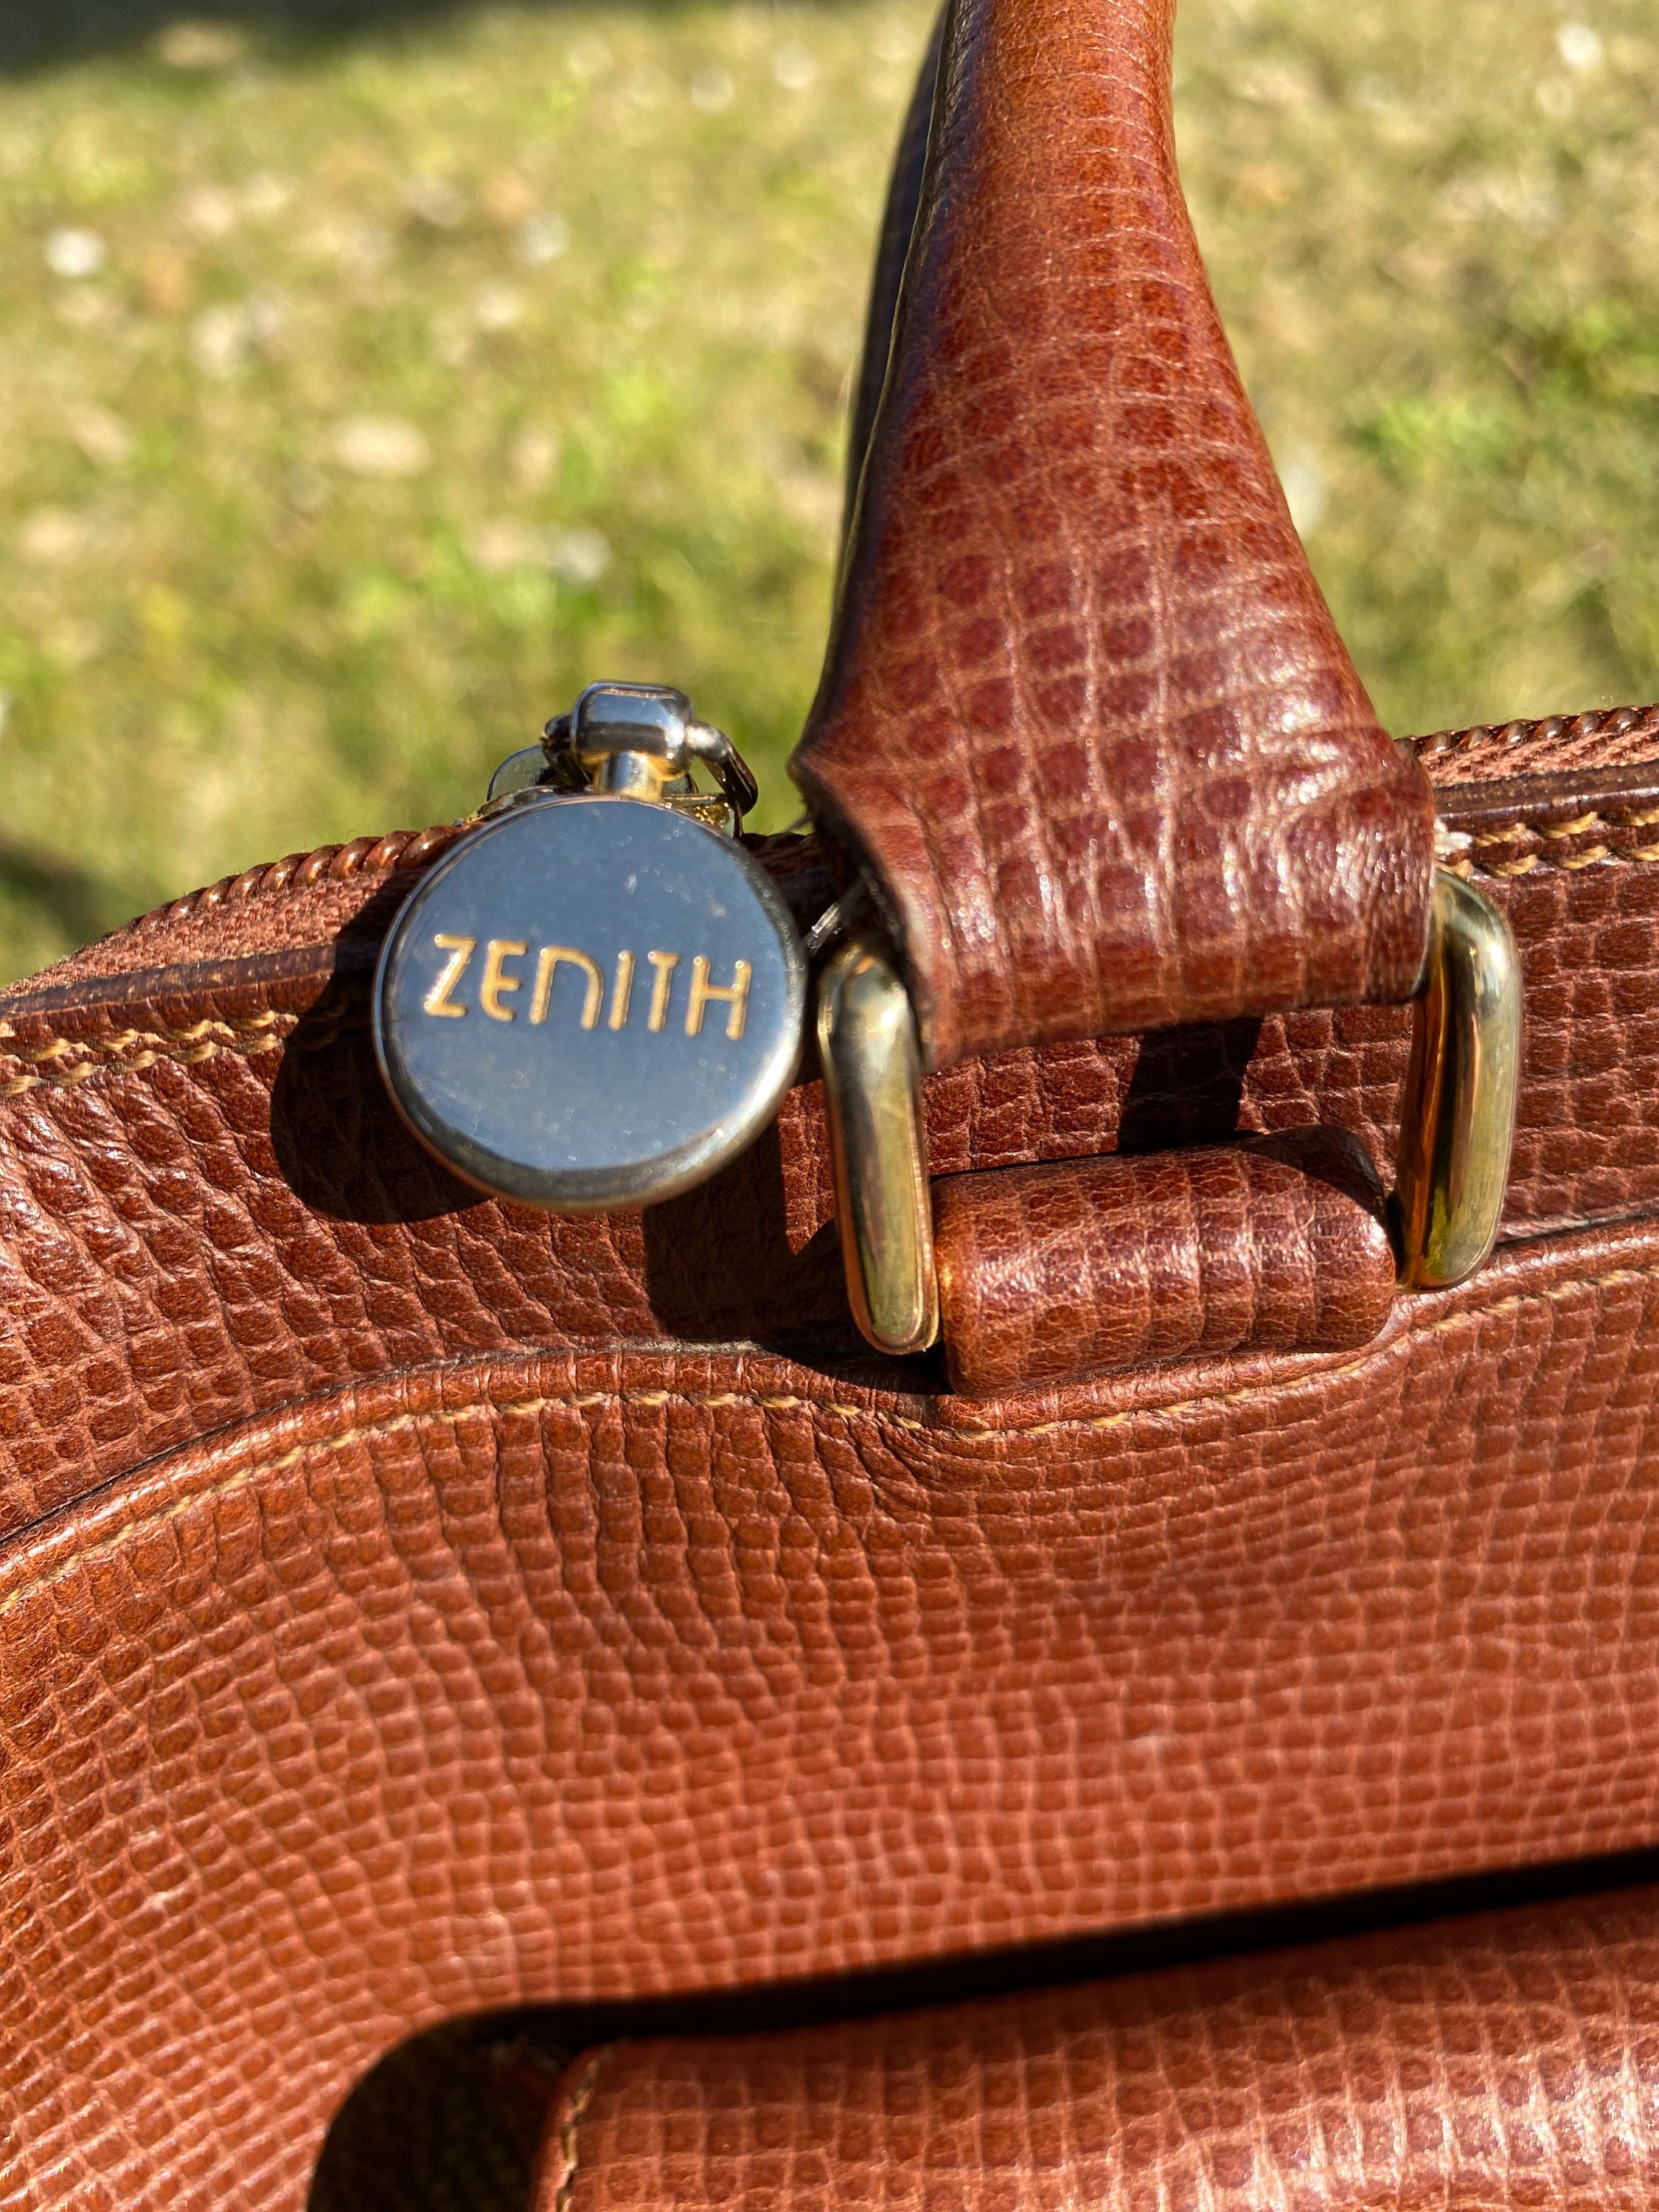 The Zenith Bag